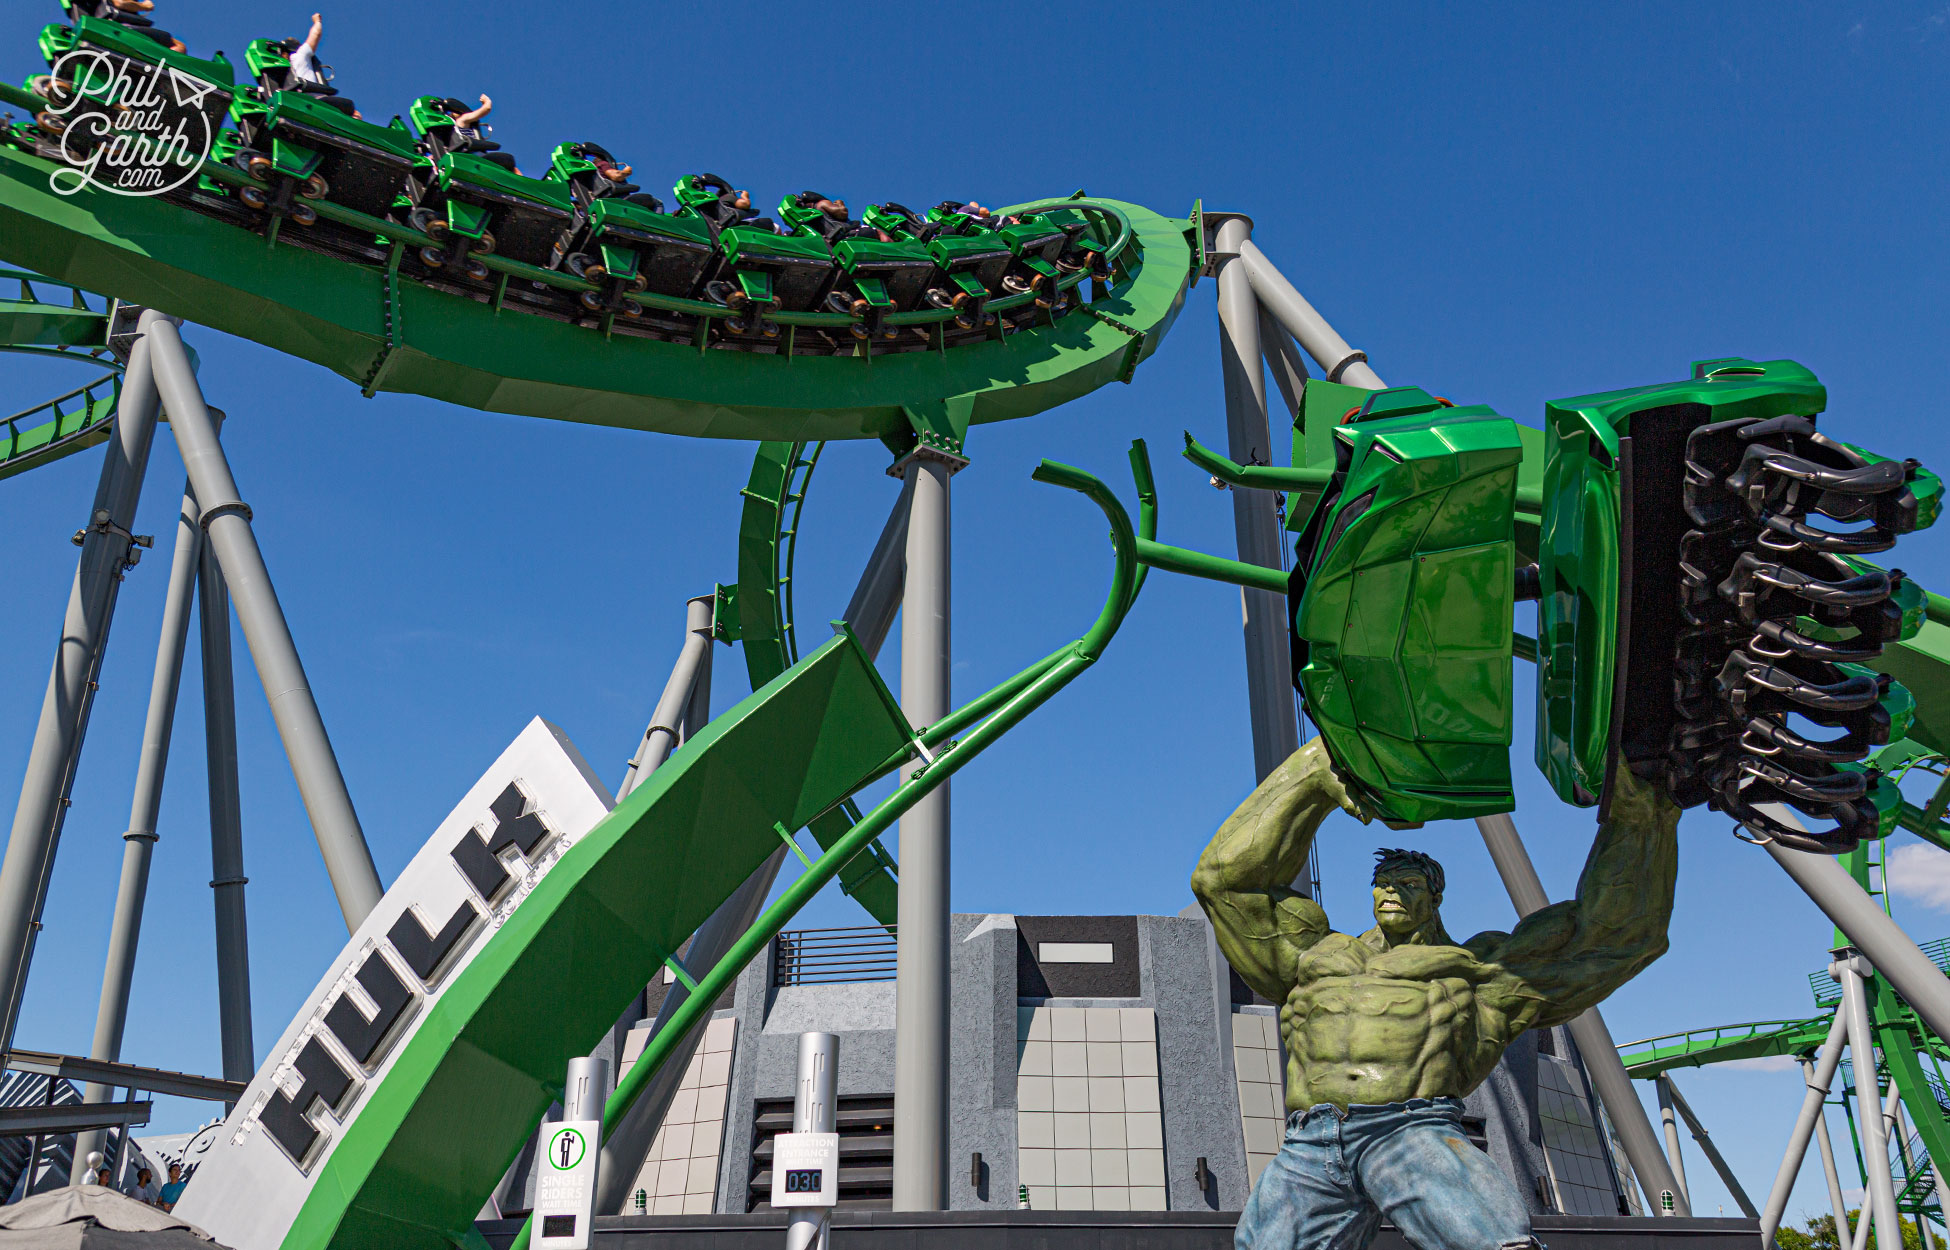 The colossal Incredible Hulk Coaster